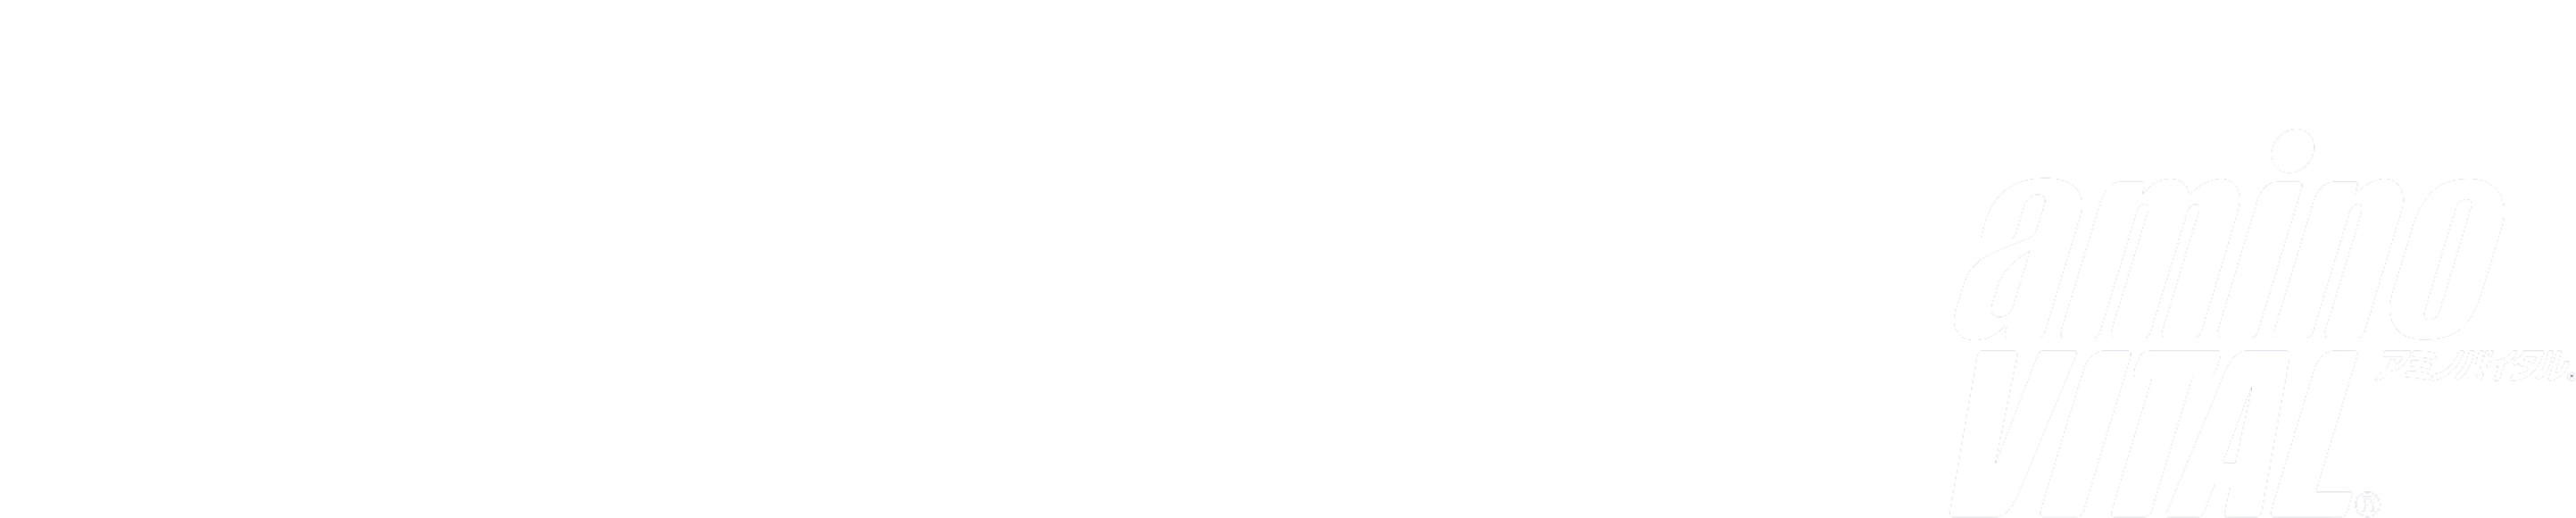 THE CHALLENGE RACE